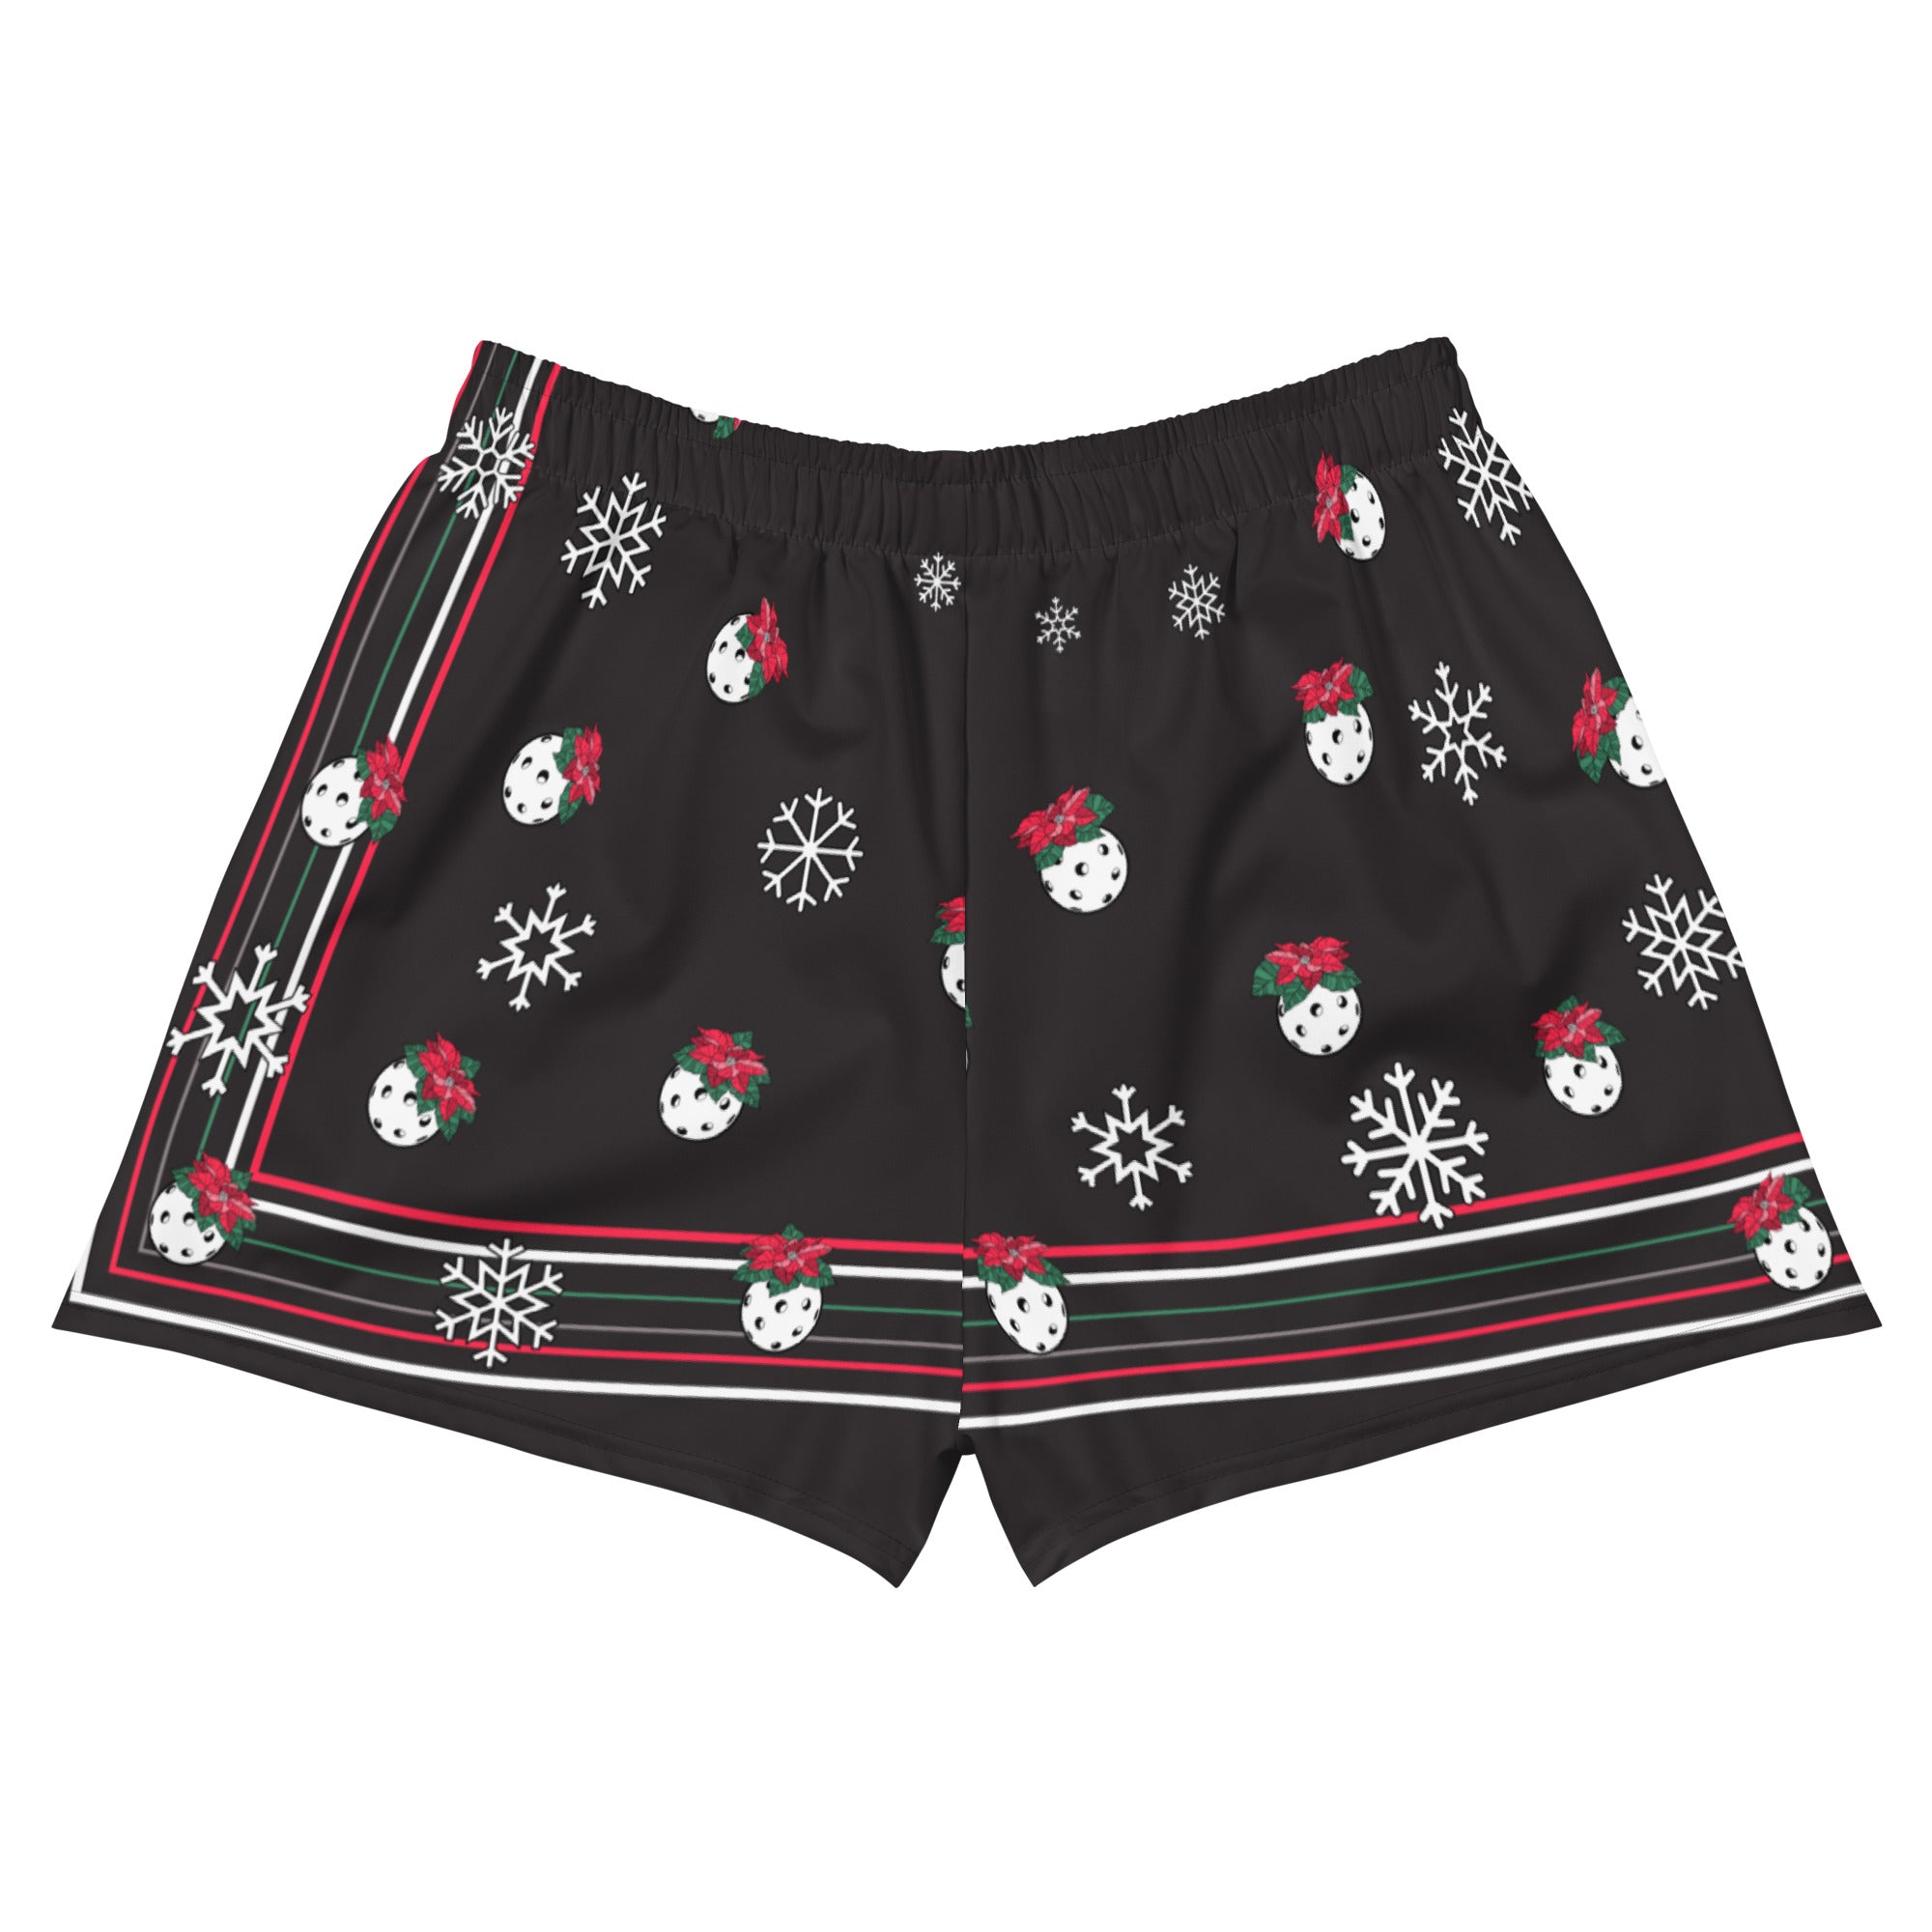 Poinsettia Pickleball© Bandana Style Women's Pickleball Athletic Short Shorts w/pockets